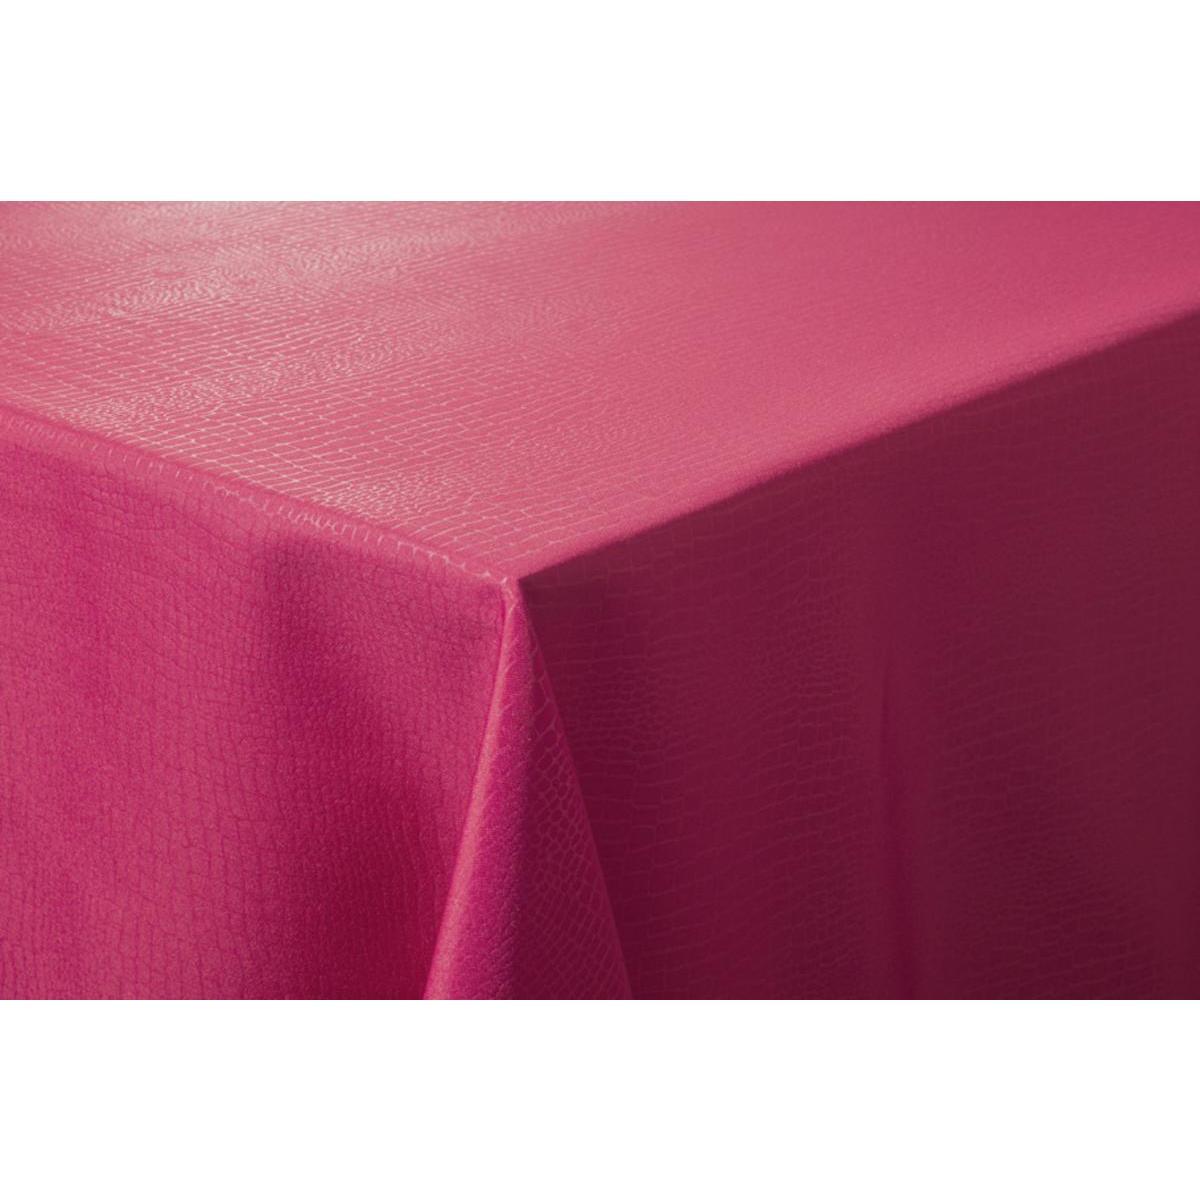 Toile cirée rectangulaire effet croco - 100 % Polyester - 145 x 300 cm - Rose fushia